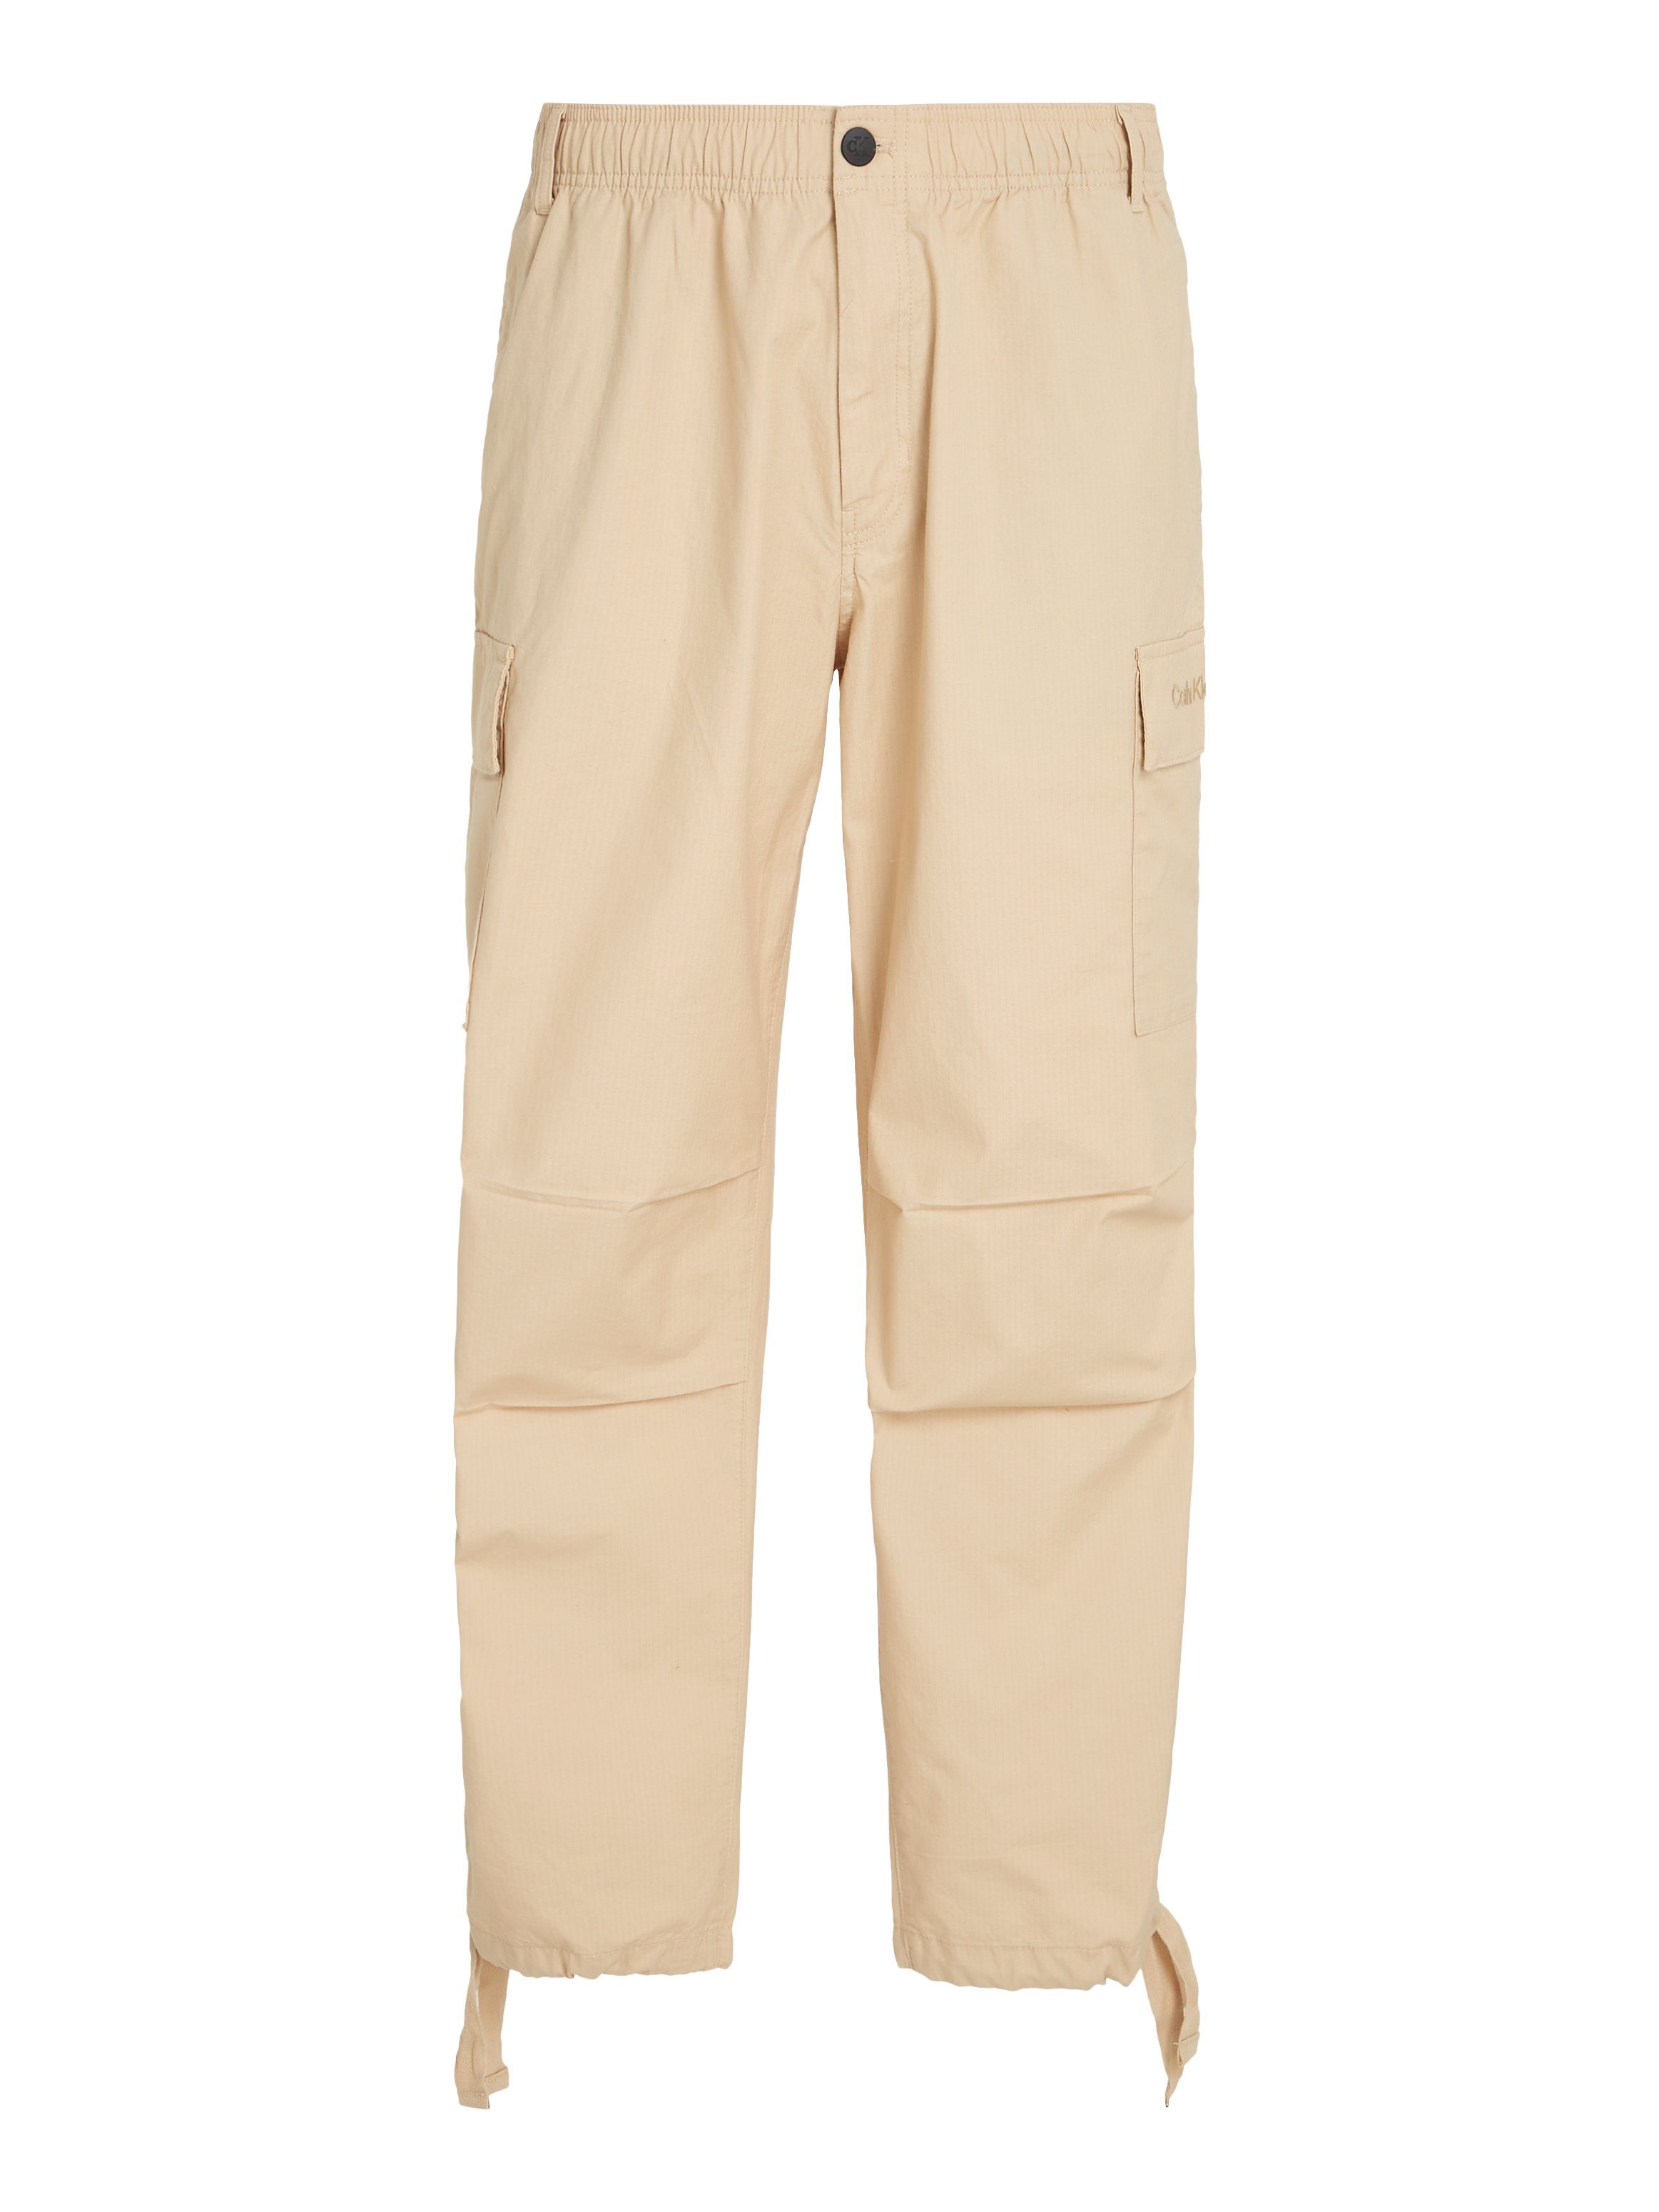 ESSENTIAL CARGO Cargohose Calvin Sand Klein Warm Jeans PANT REGULAR